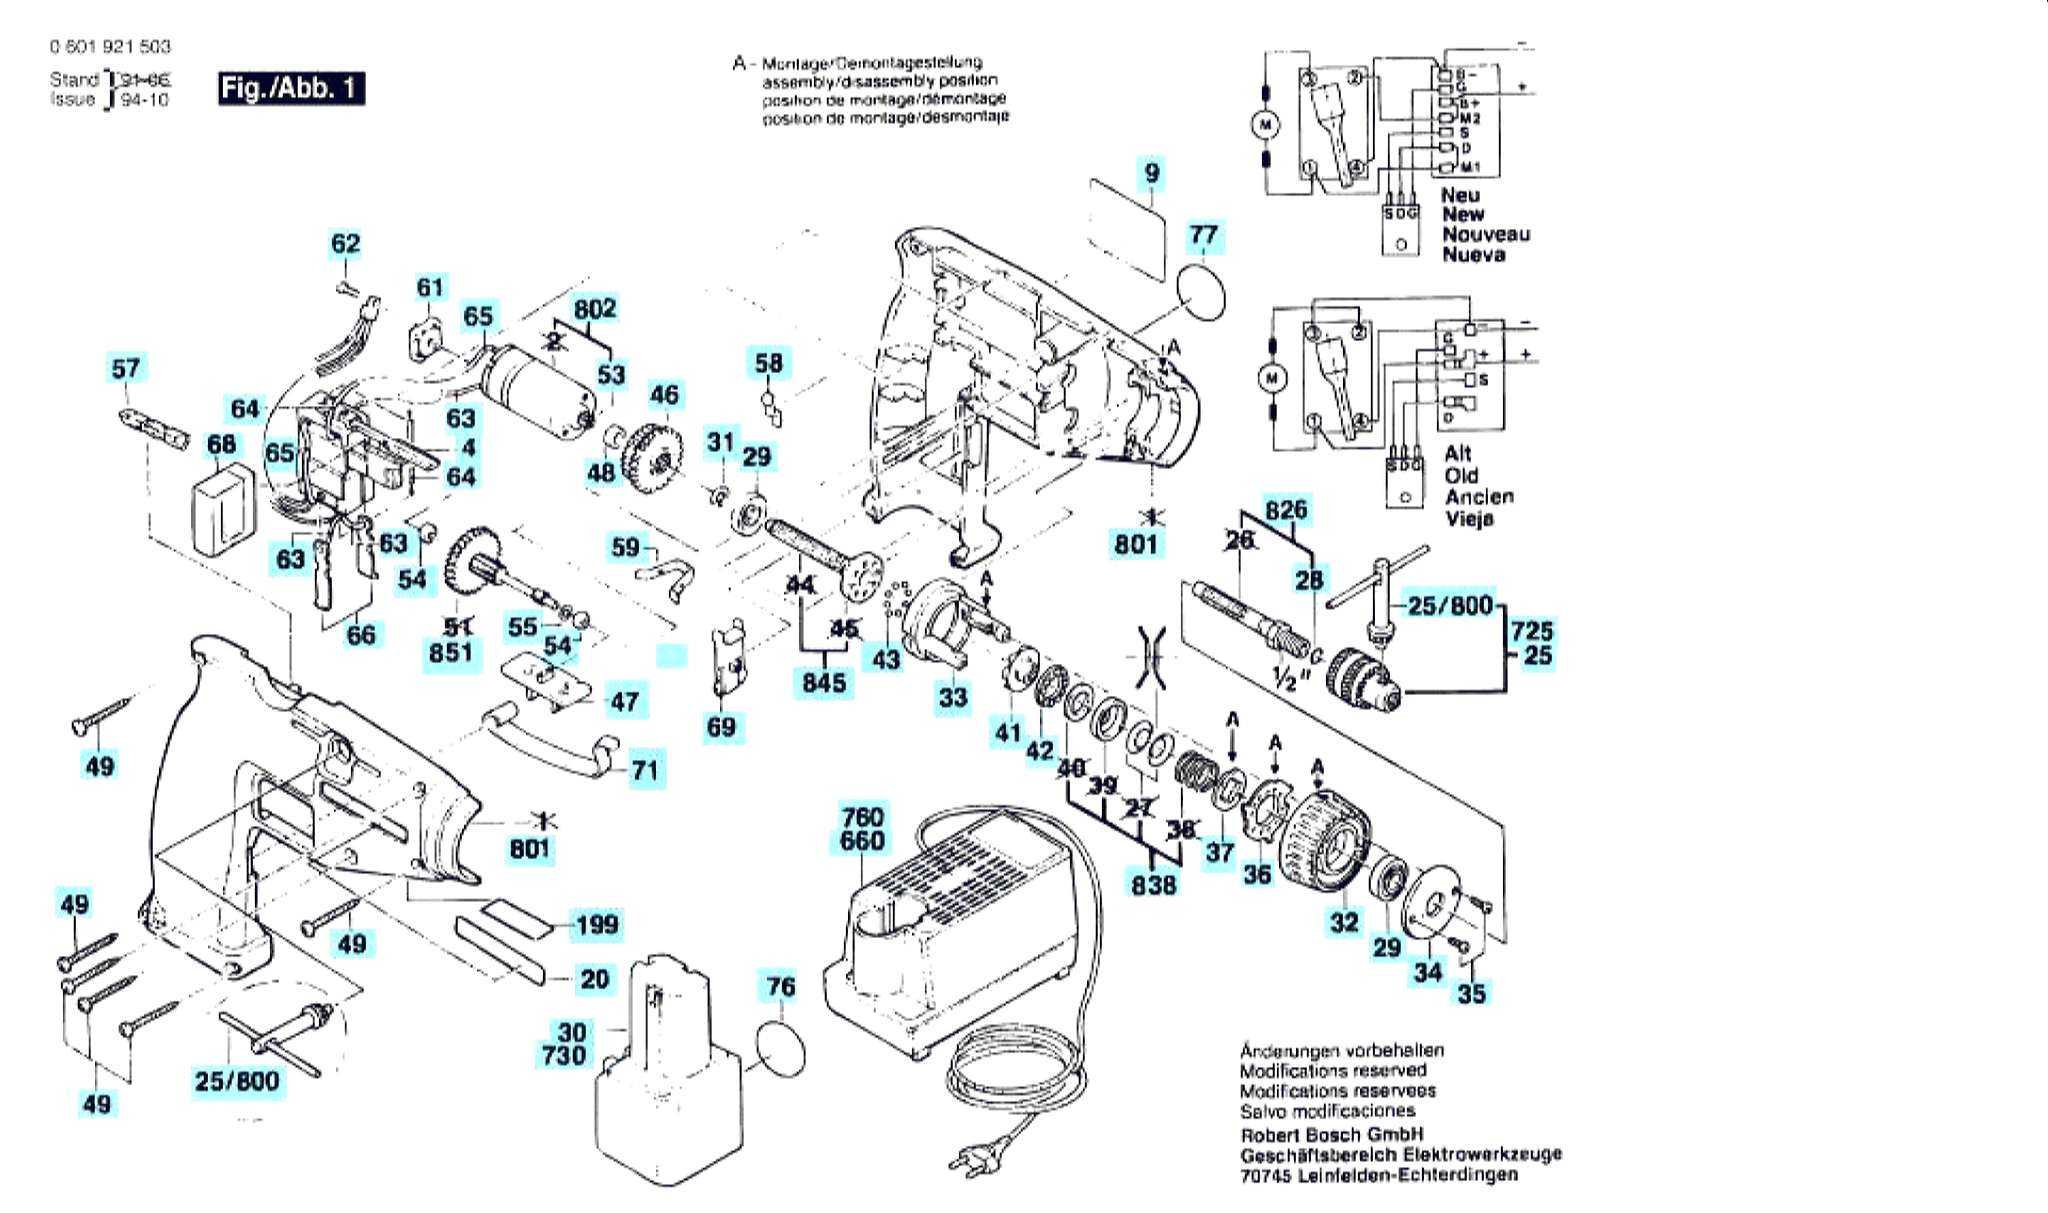 Запчасти, схема и деталировка Bosch GSR 12 VES (ТИП 0601921567)